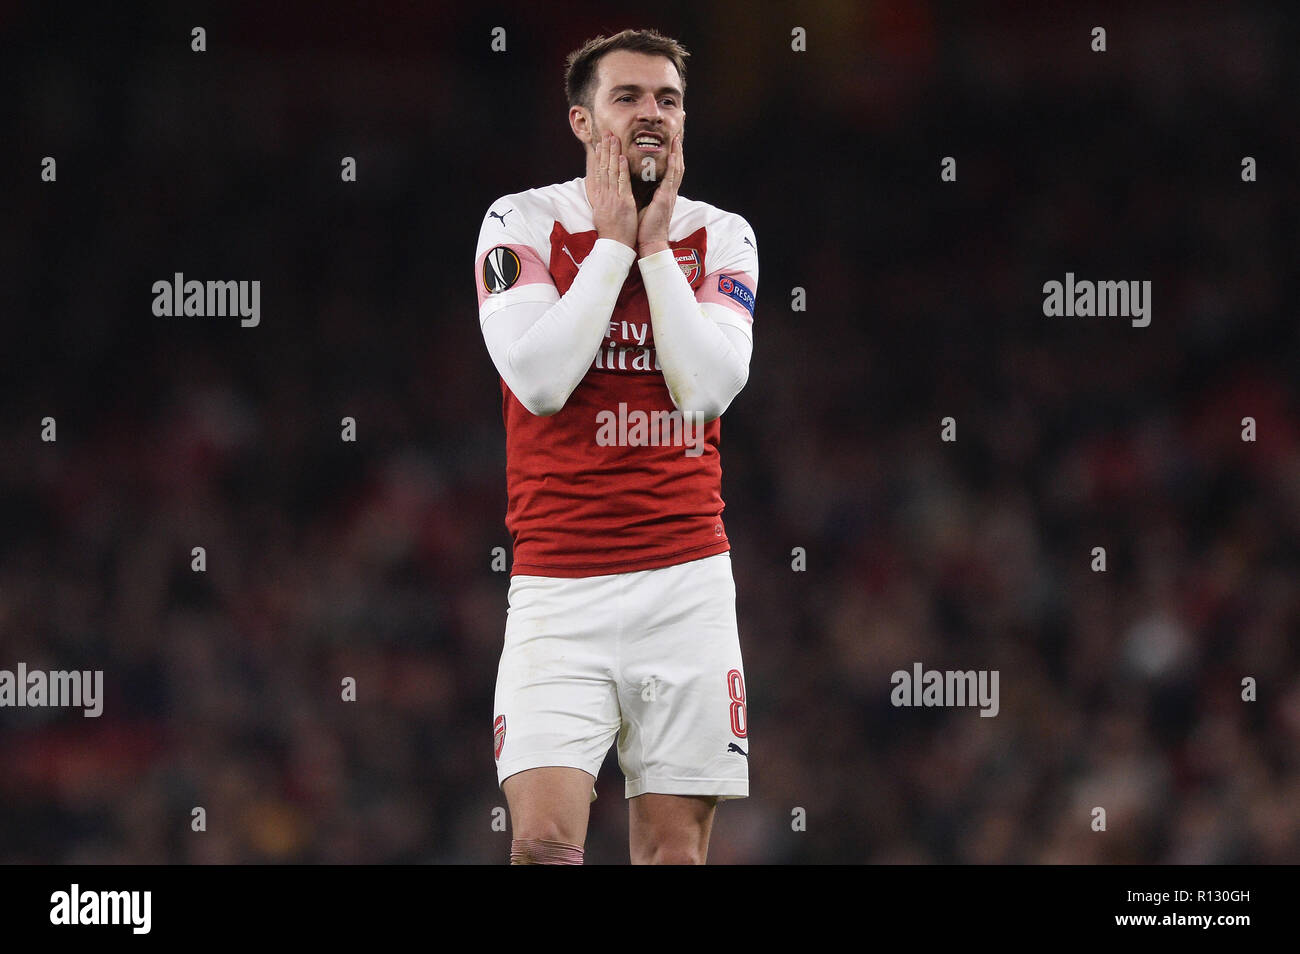 London, UK. 8th November, 2018. Aaron Ramsey of Arsenal - Arsenal v Sporting CP, UEFA Europa League - Group E, Emirates Stadium, London (Holloway) - 8th November 2018 Credit: Richard Calver/Alamy Live News Stock Photo